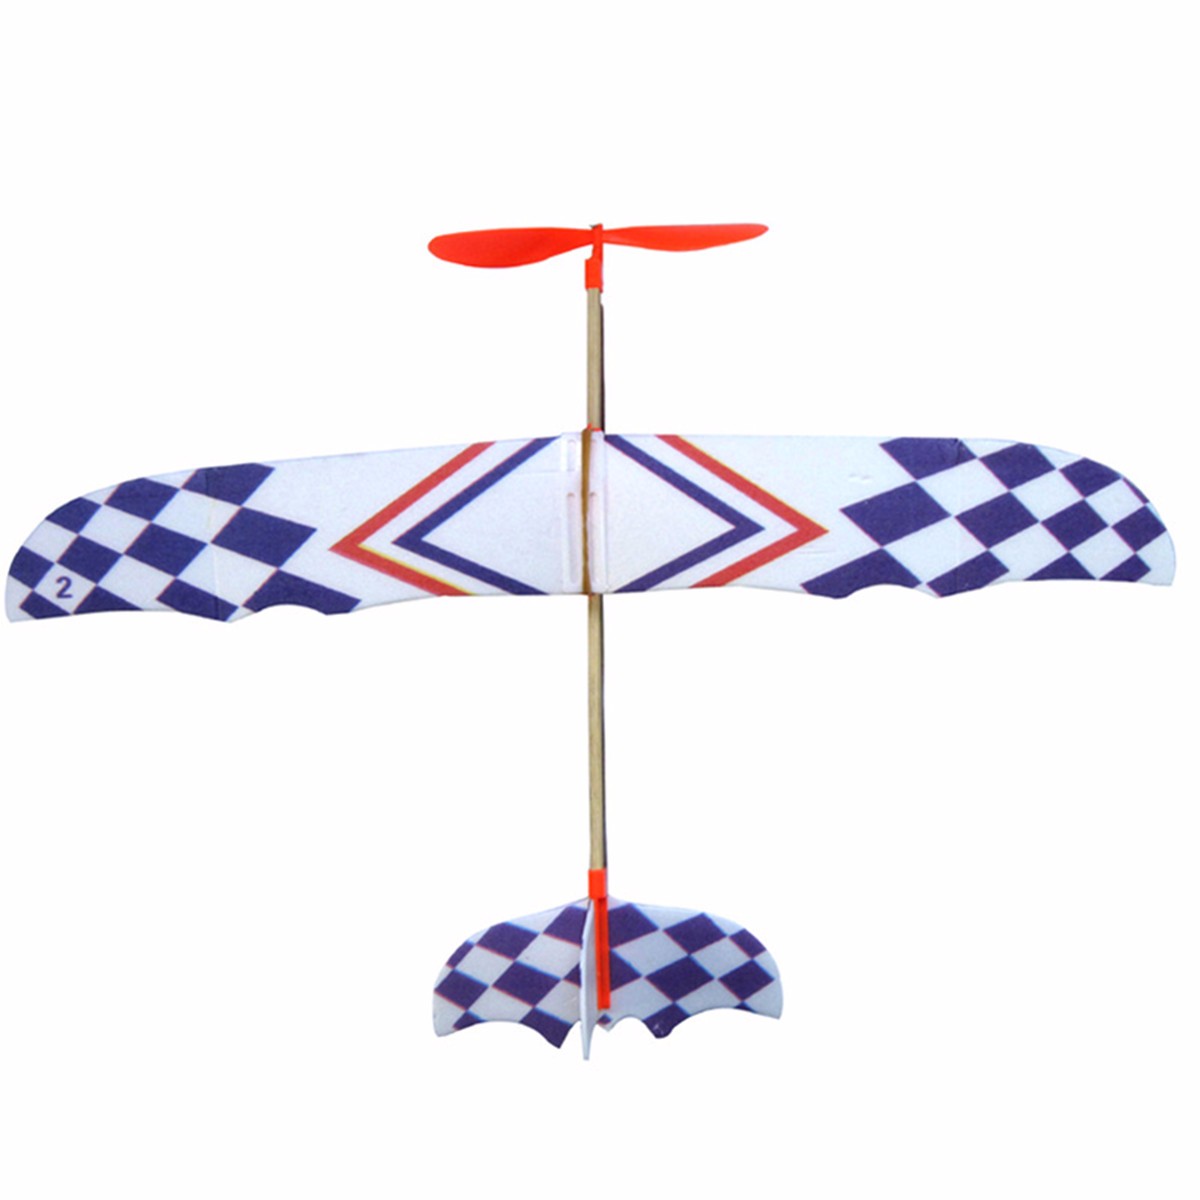 Elastic-Rubber-Band-Powered-DIY-Foam-Plane-Kit-Aircraft-Model-Educational-Toy-1120805-3